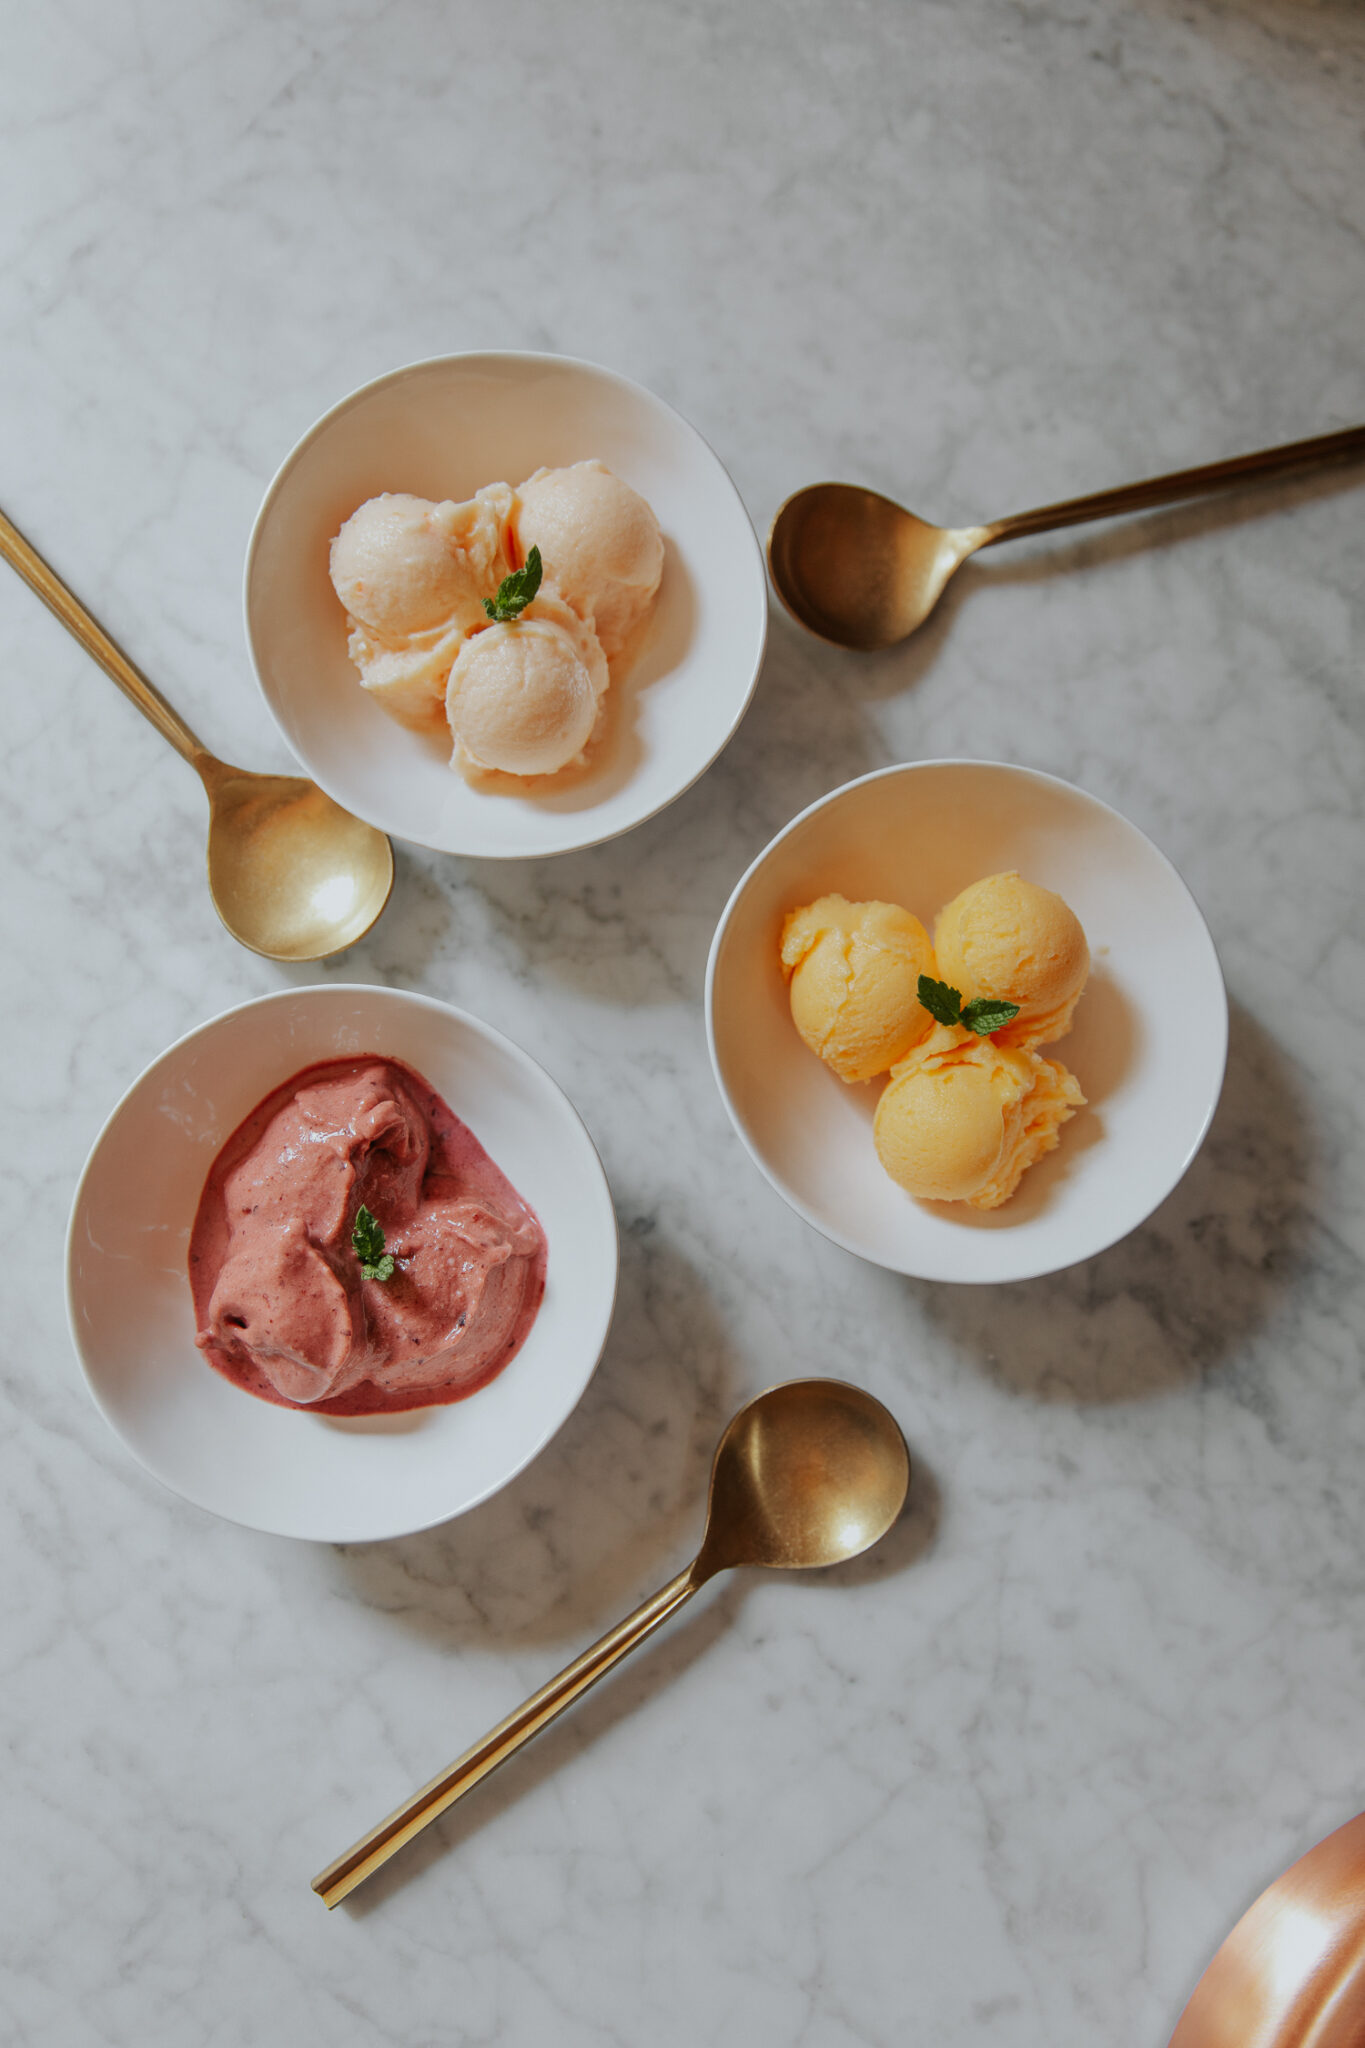 Unleashing Culinary Creativity with the Ninja CREAMi Ice Cream